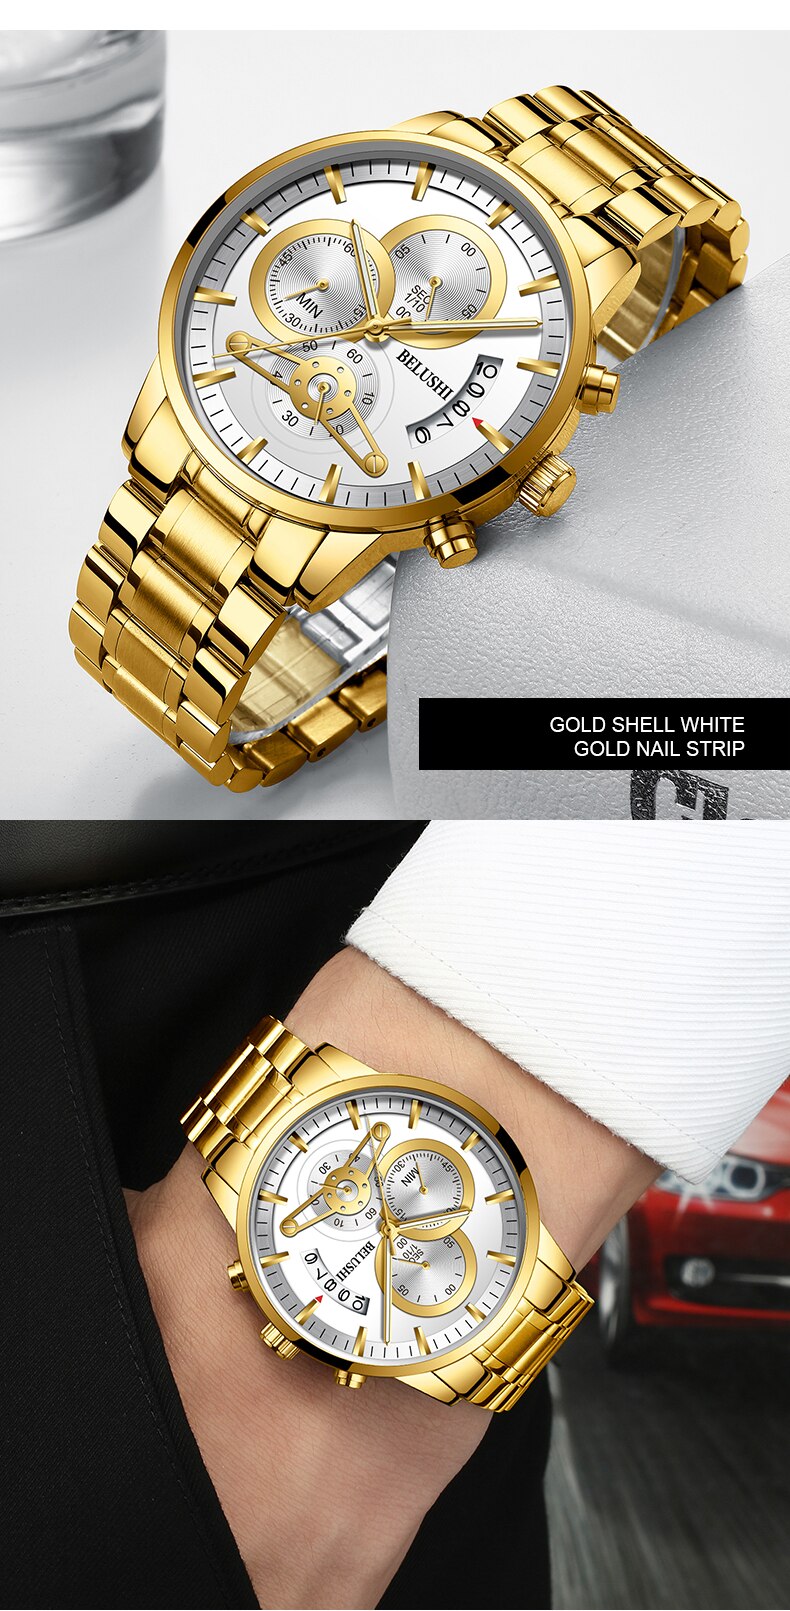 YSYH quartz watch men's gold business watch countdown calendar reloj hombre